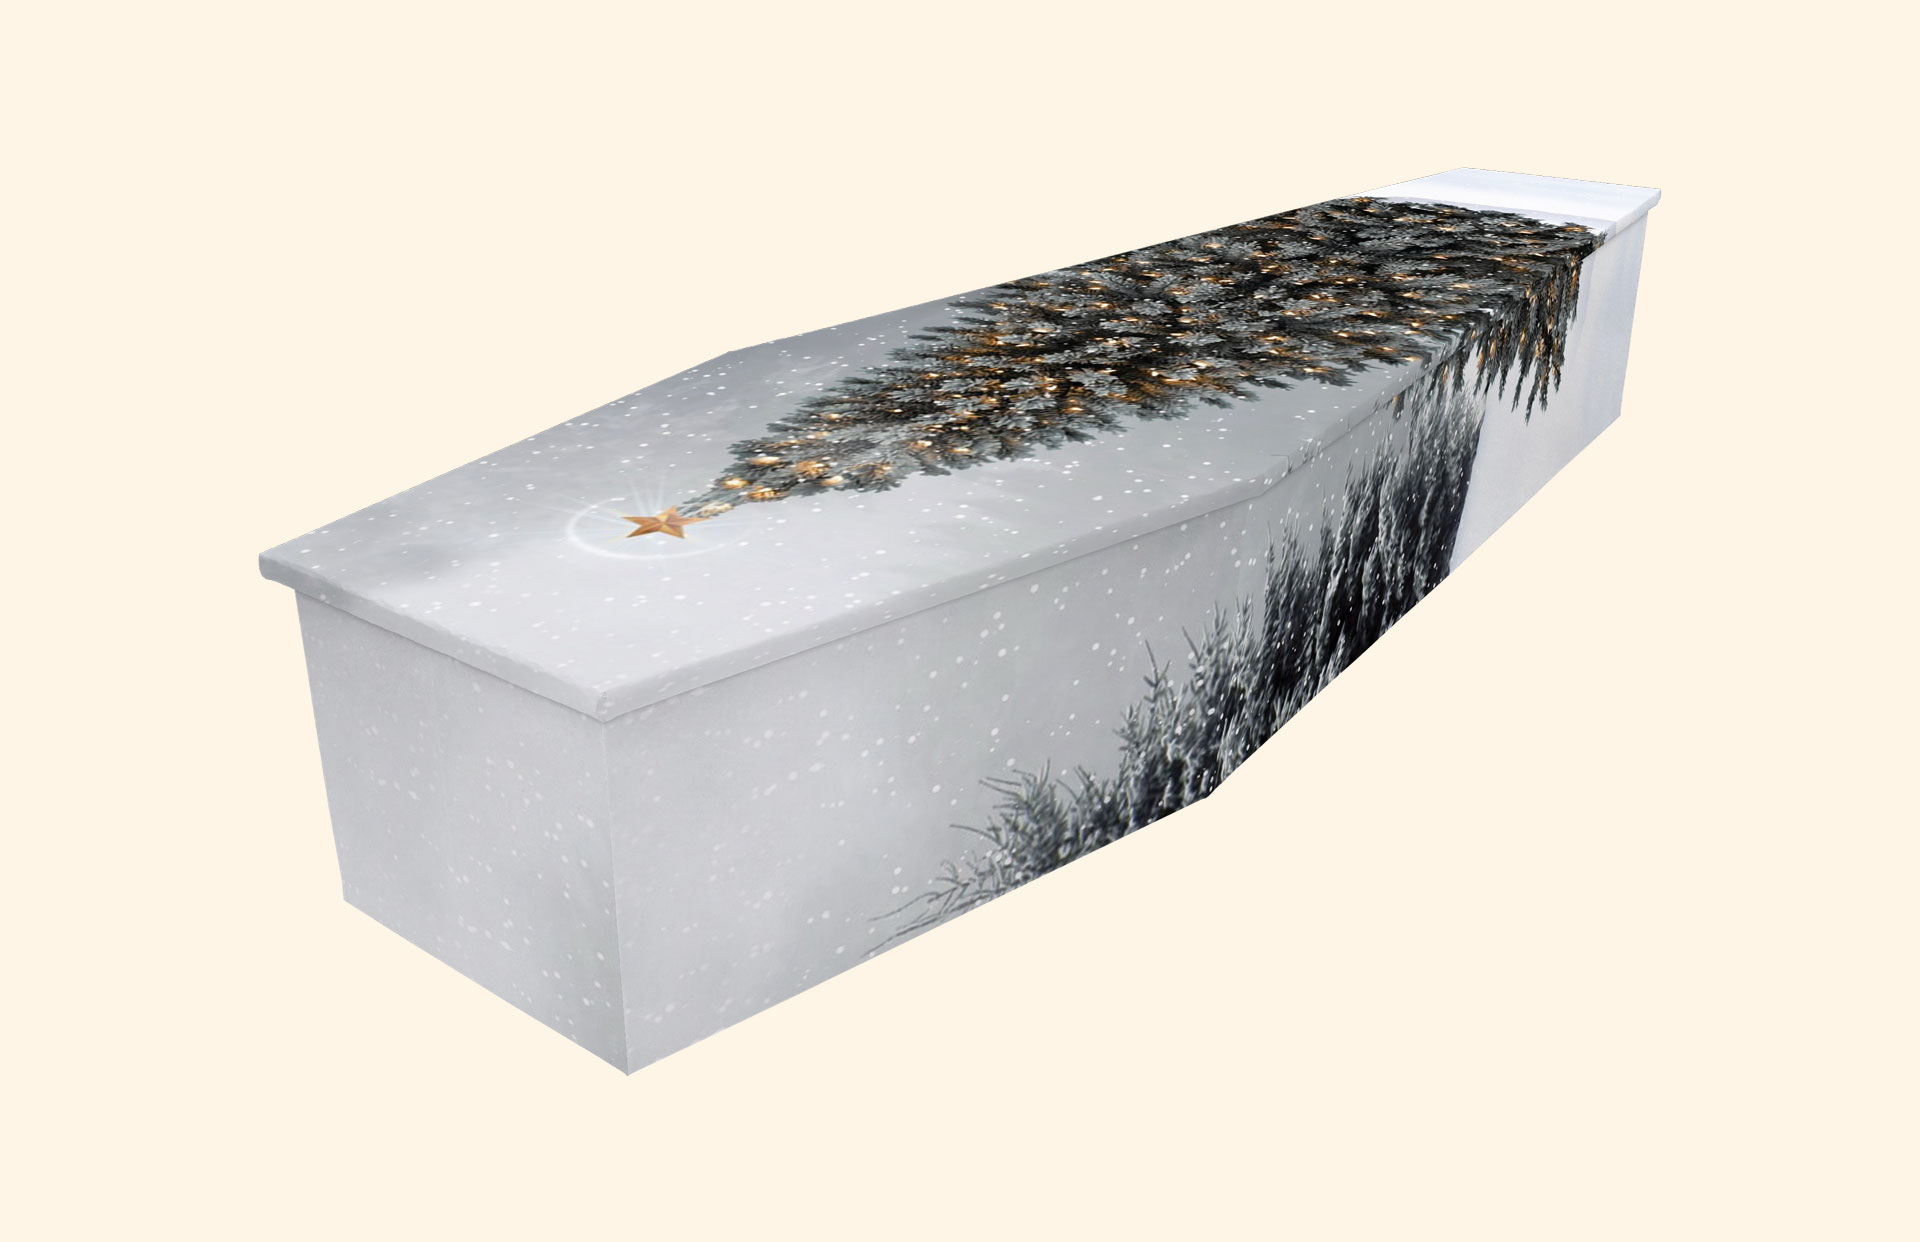 Christmas Tree design on a cardboard coffin